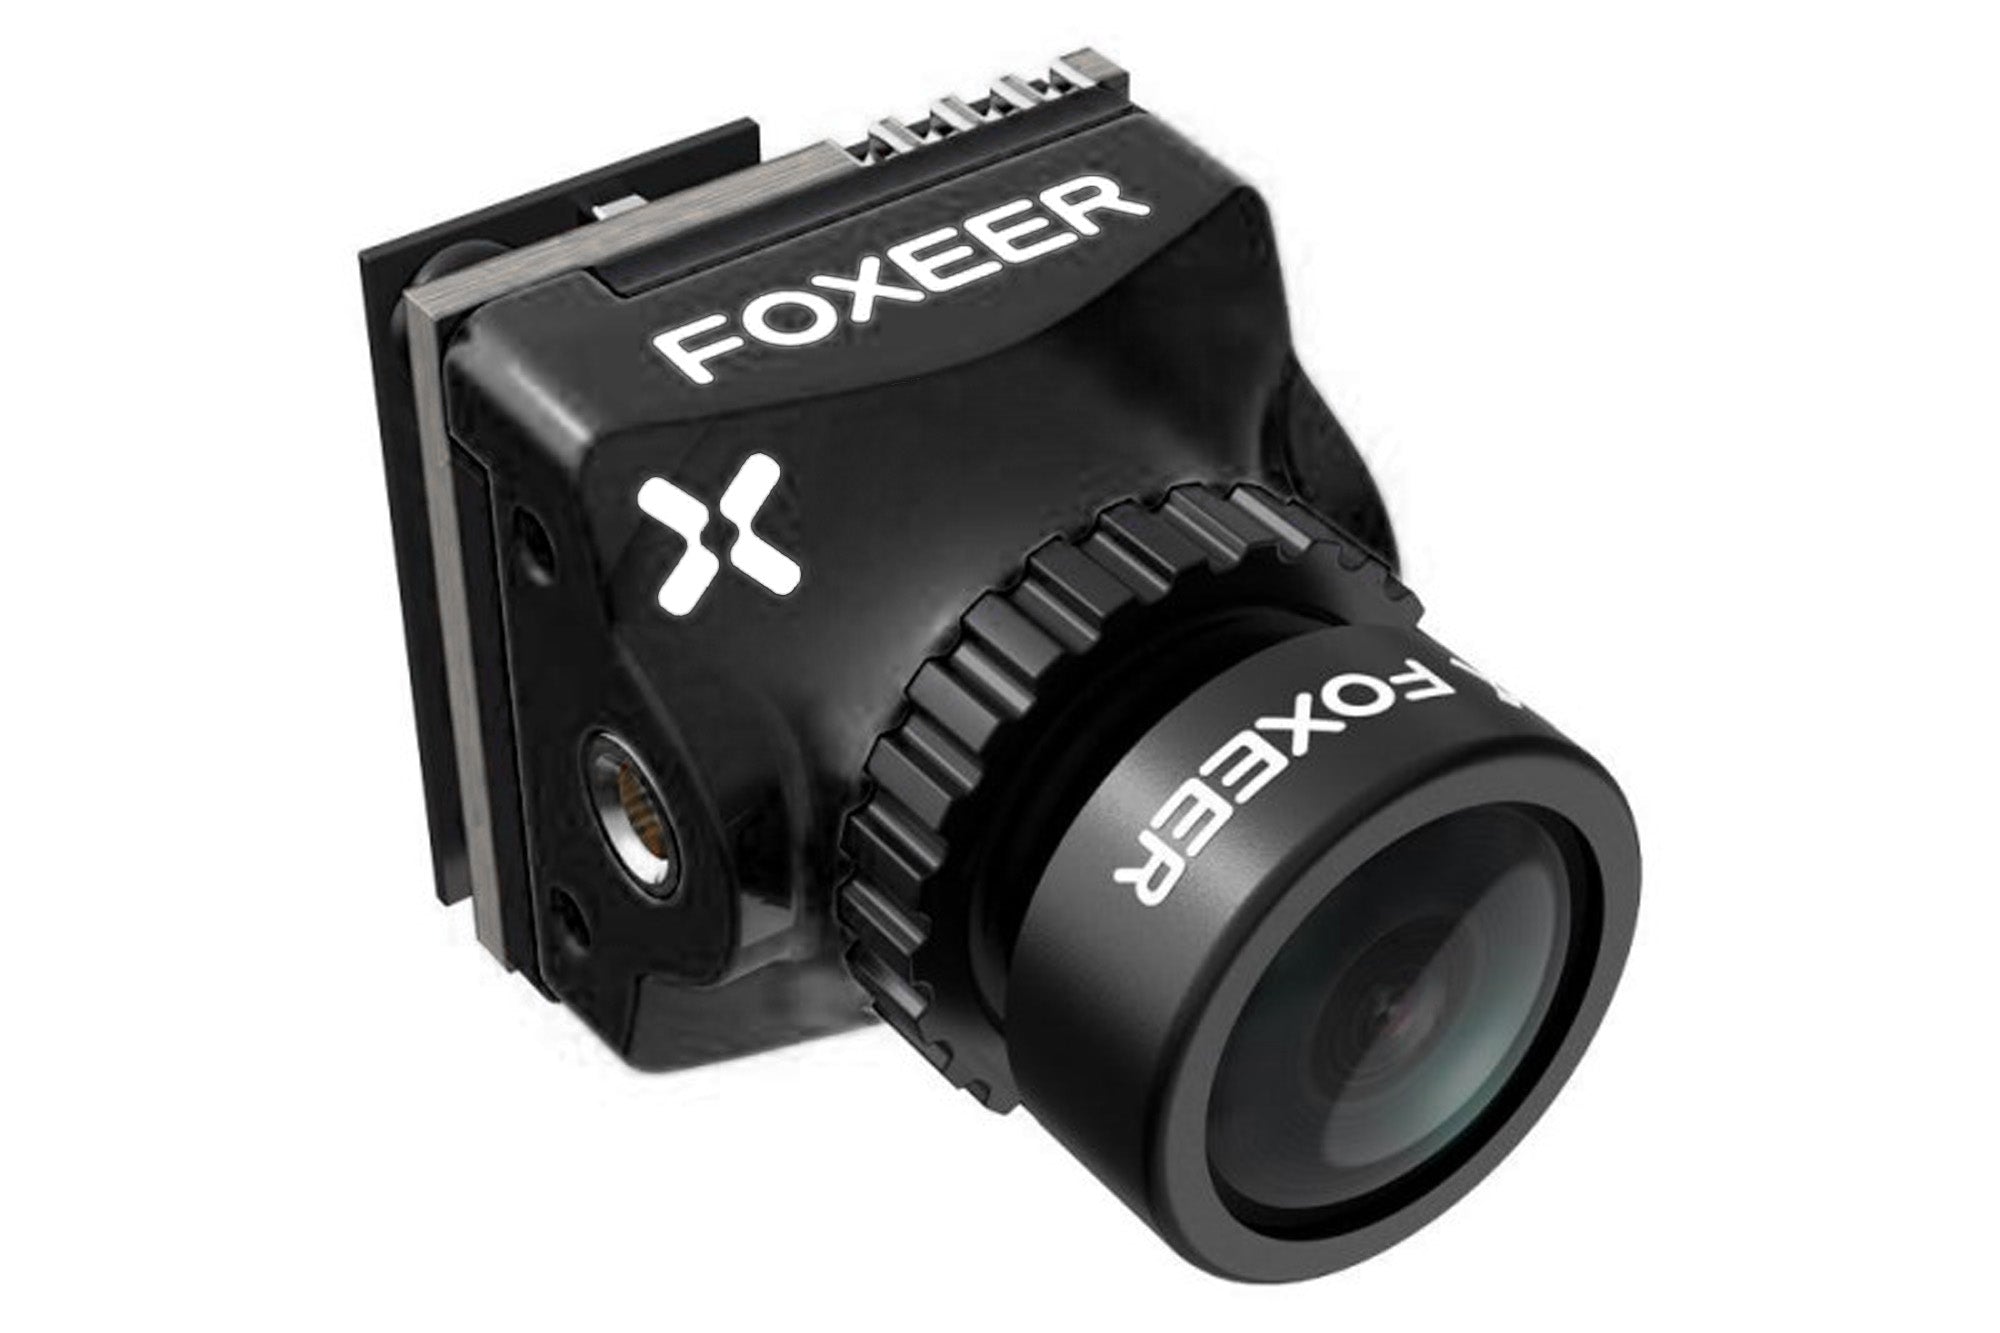 Foxeer Nano toothless FPV camera